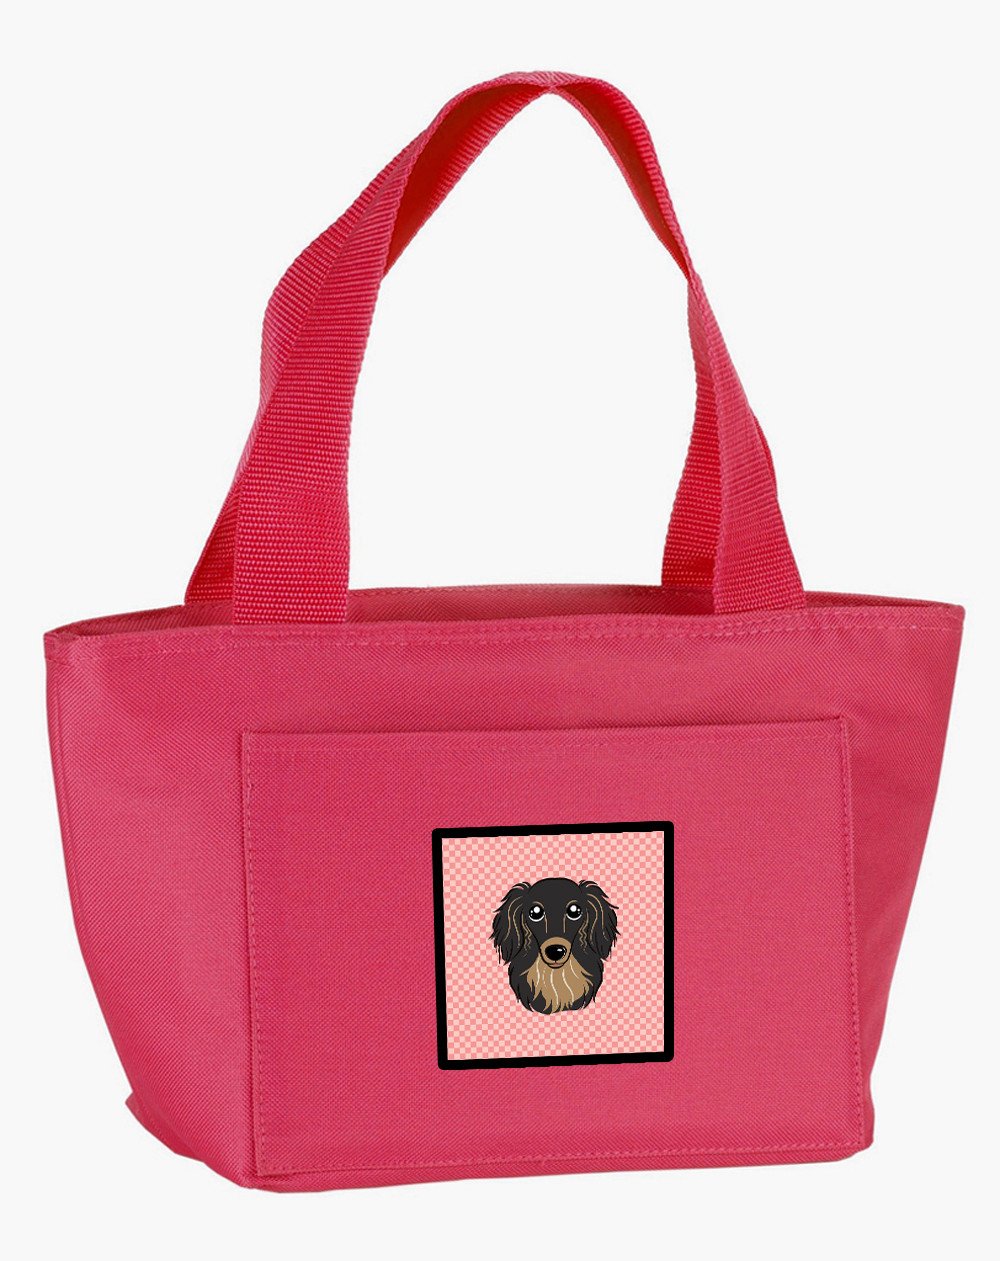 Checkerboard Pink Longhair Black and Tan Dachshund Lunch Bag BB1213PK-8808 by Caroline's Treasures